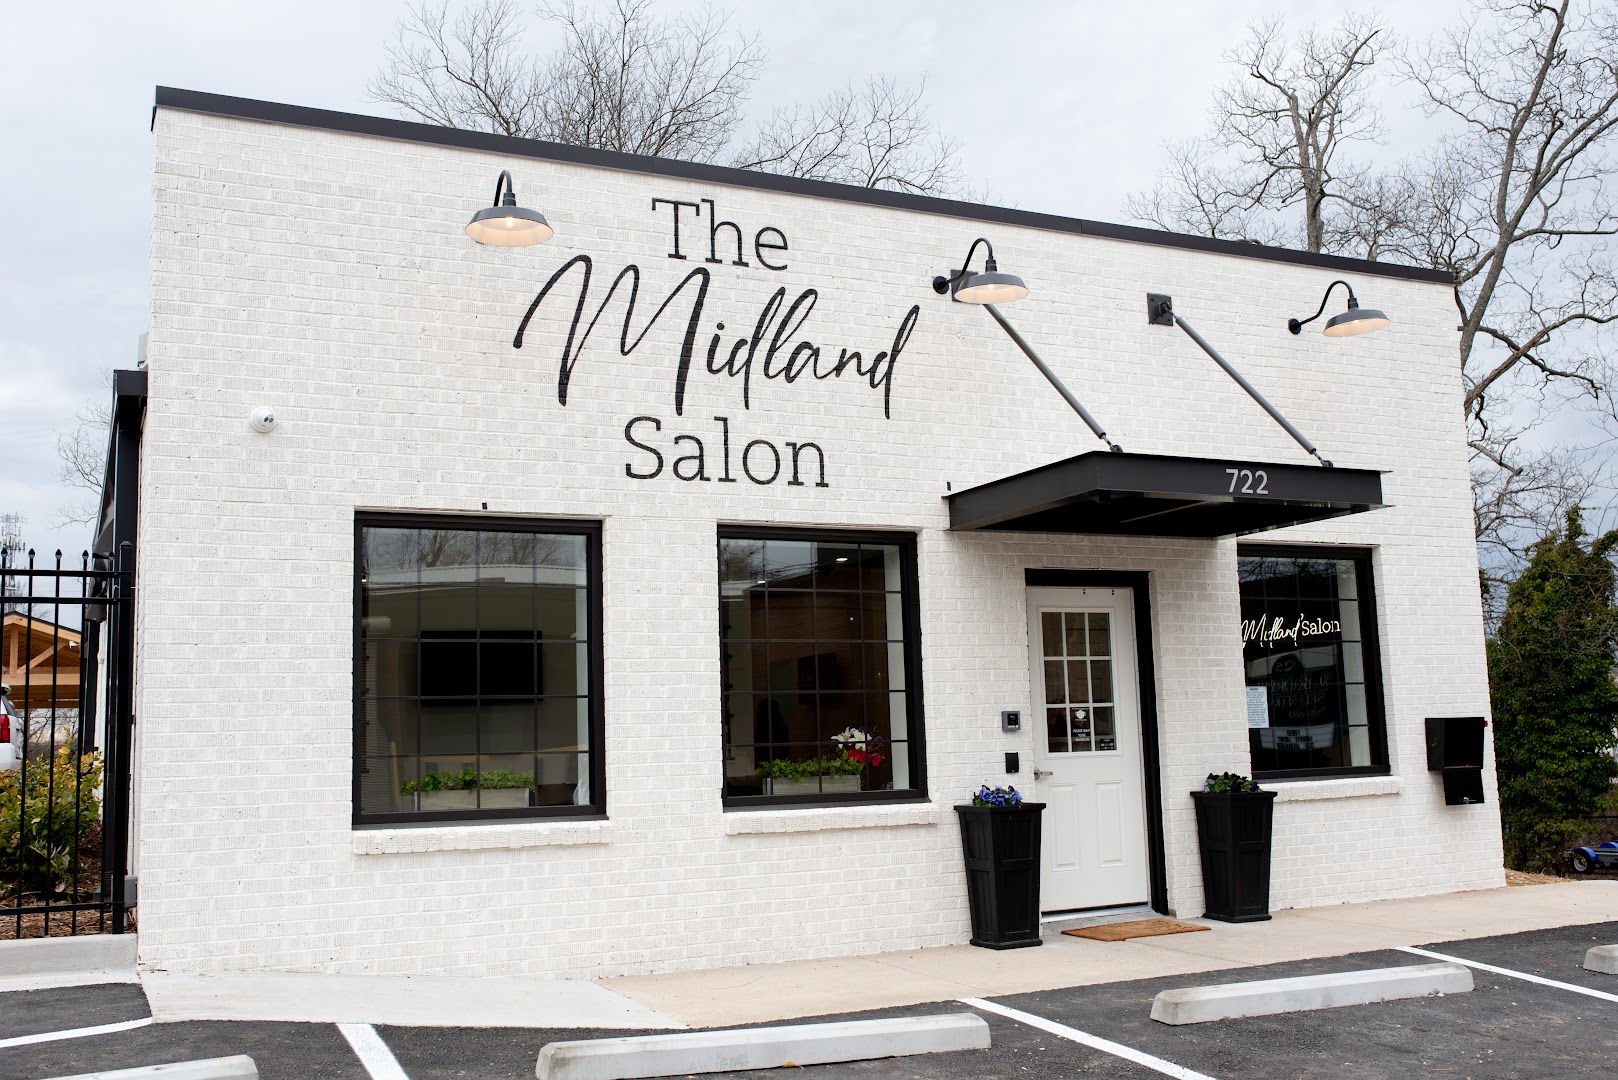 The Midland Salon